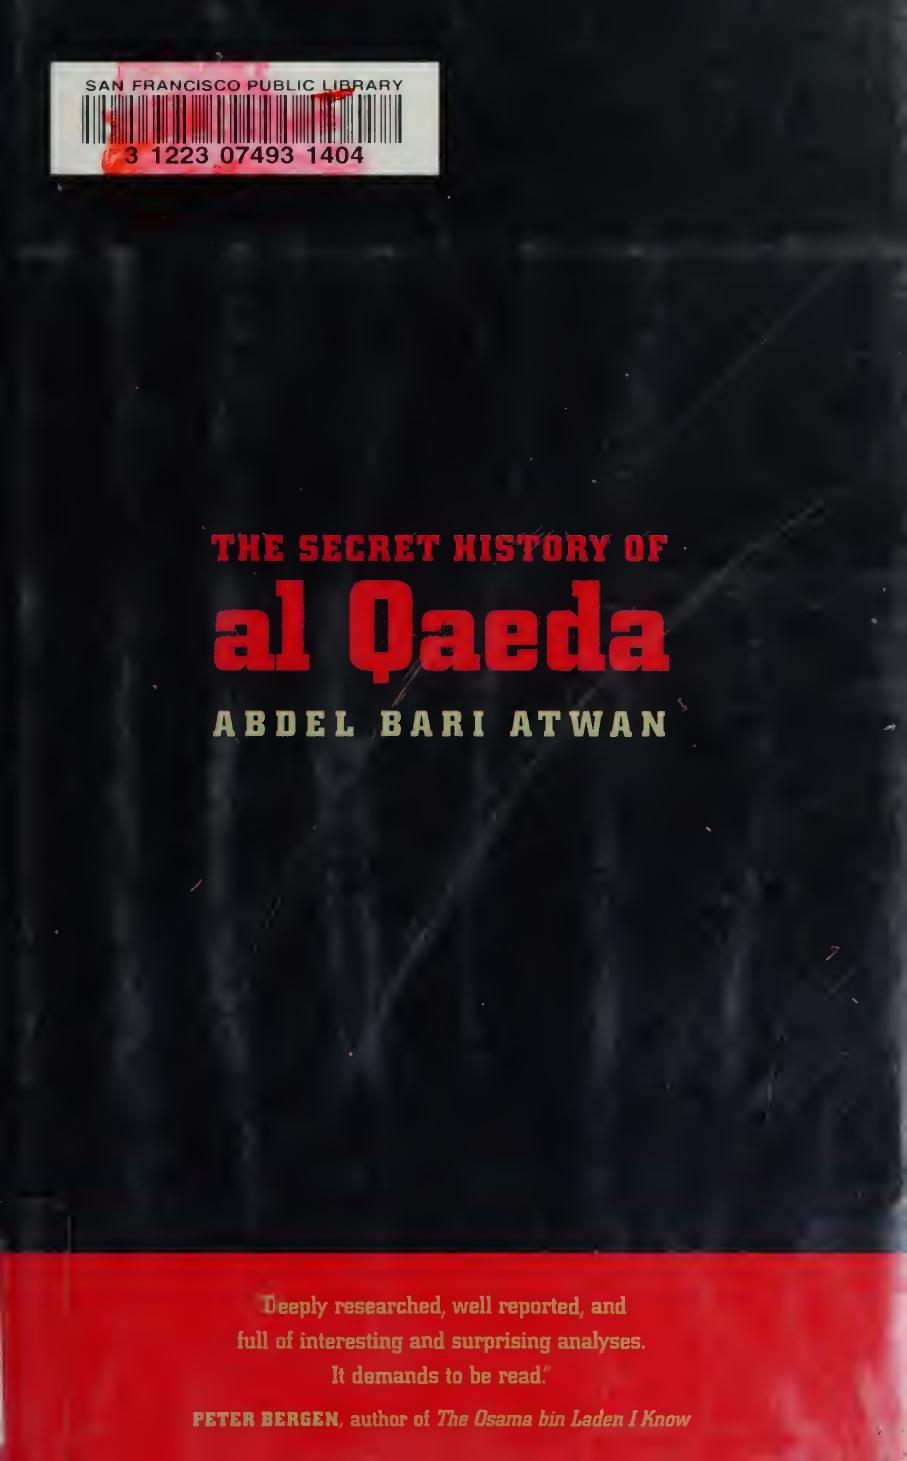 The Secret History of al Qaeda by Abdel Bari Atwan